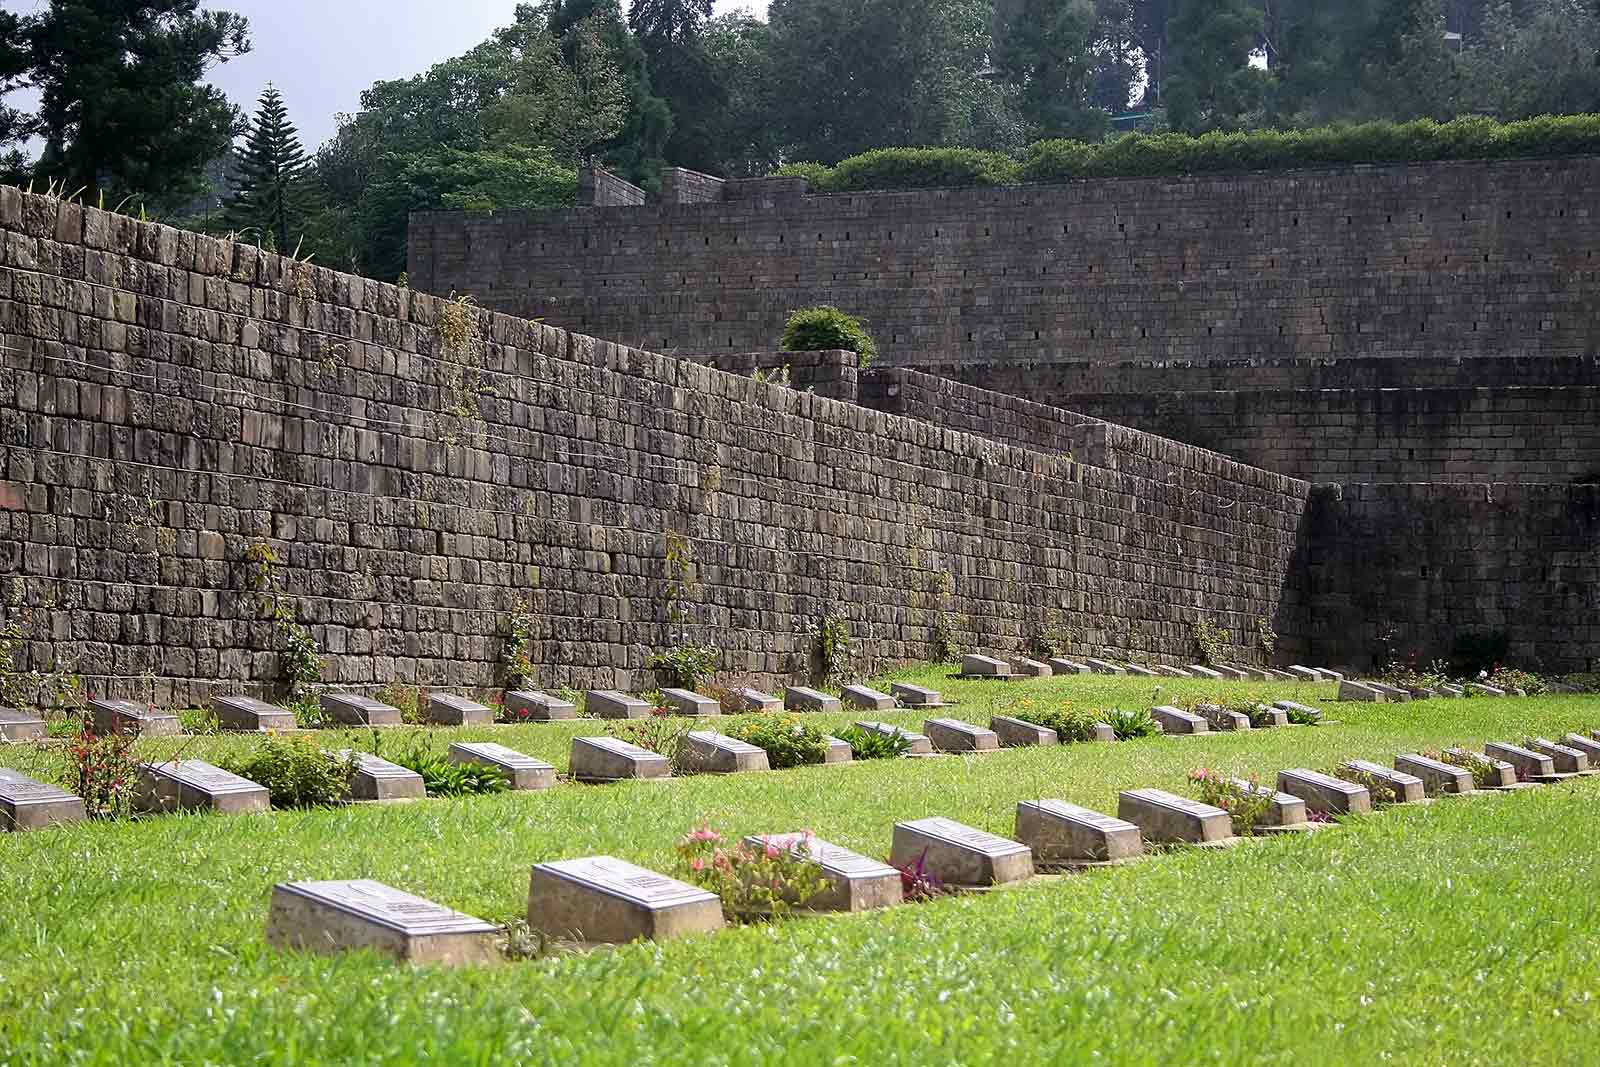 The WW2 graveyard in Kohima, Nagaland.